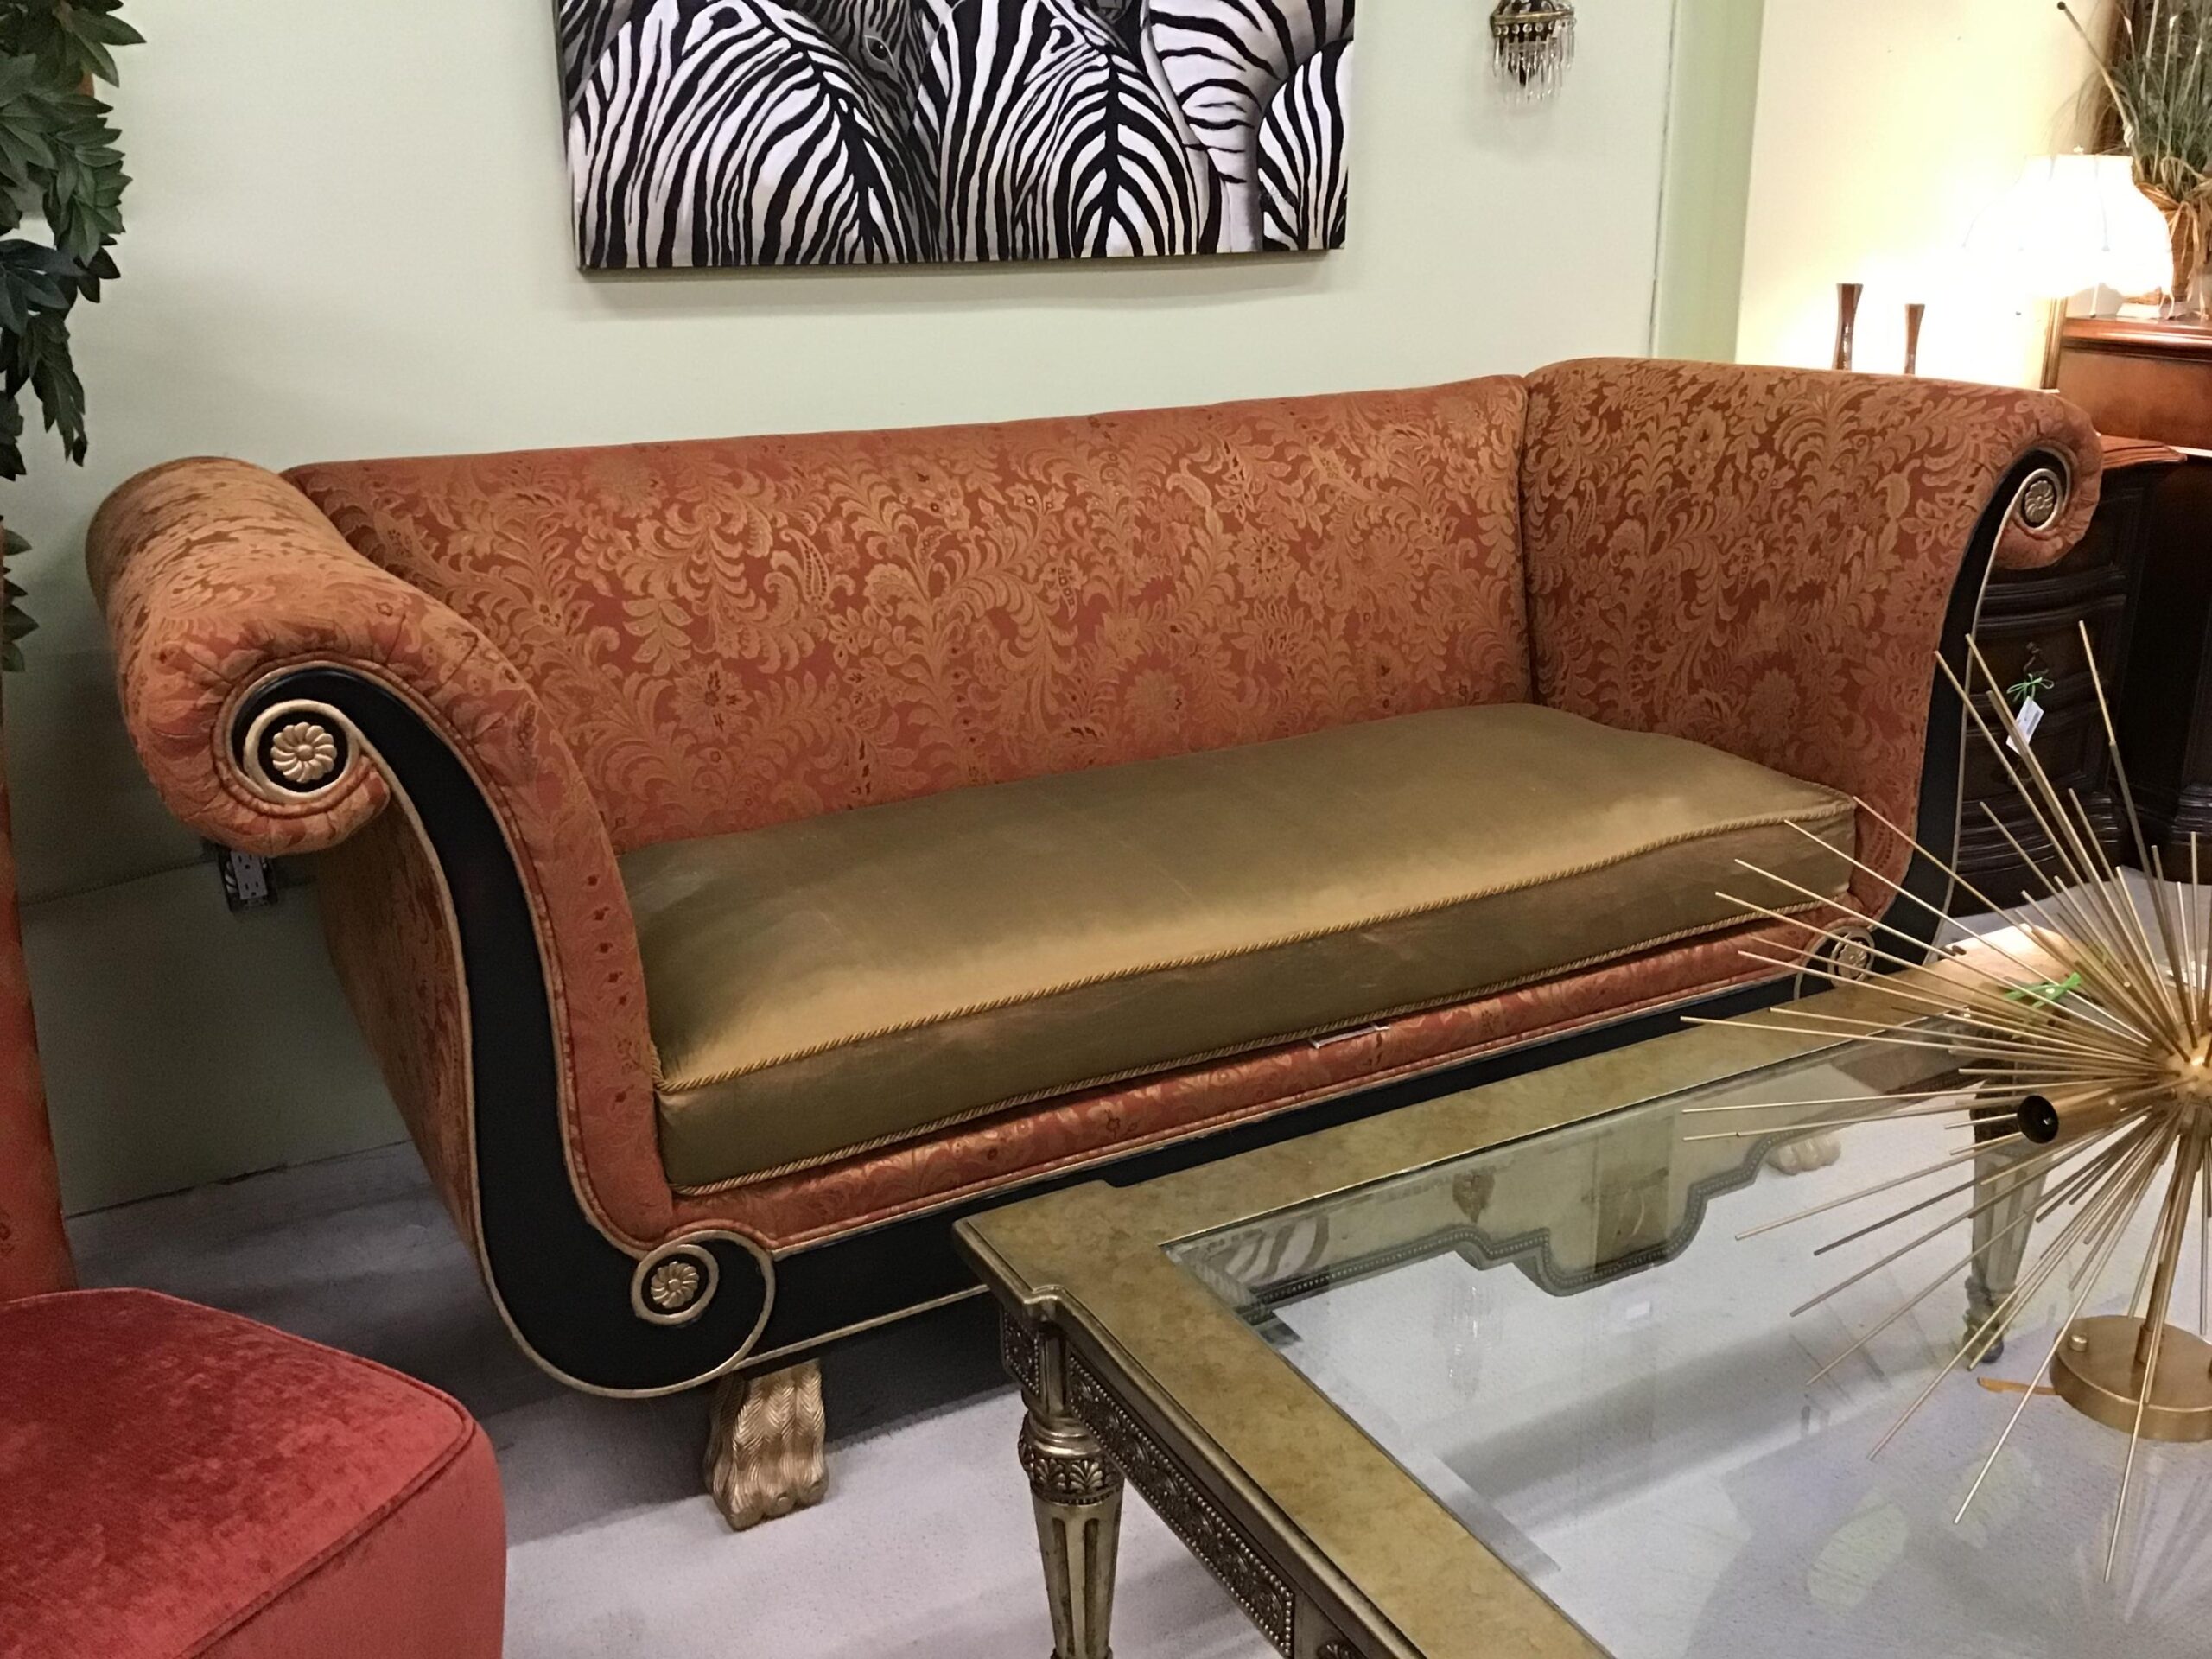 REGENCY HOUSE Coral, Black & Gold Sofa – Say Good BUY $197.28